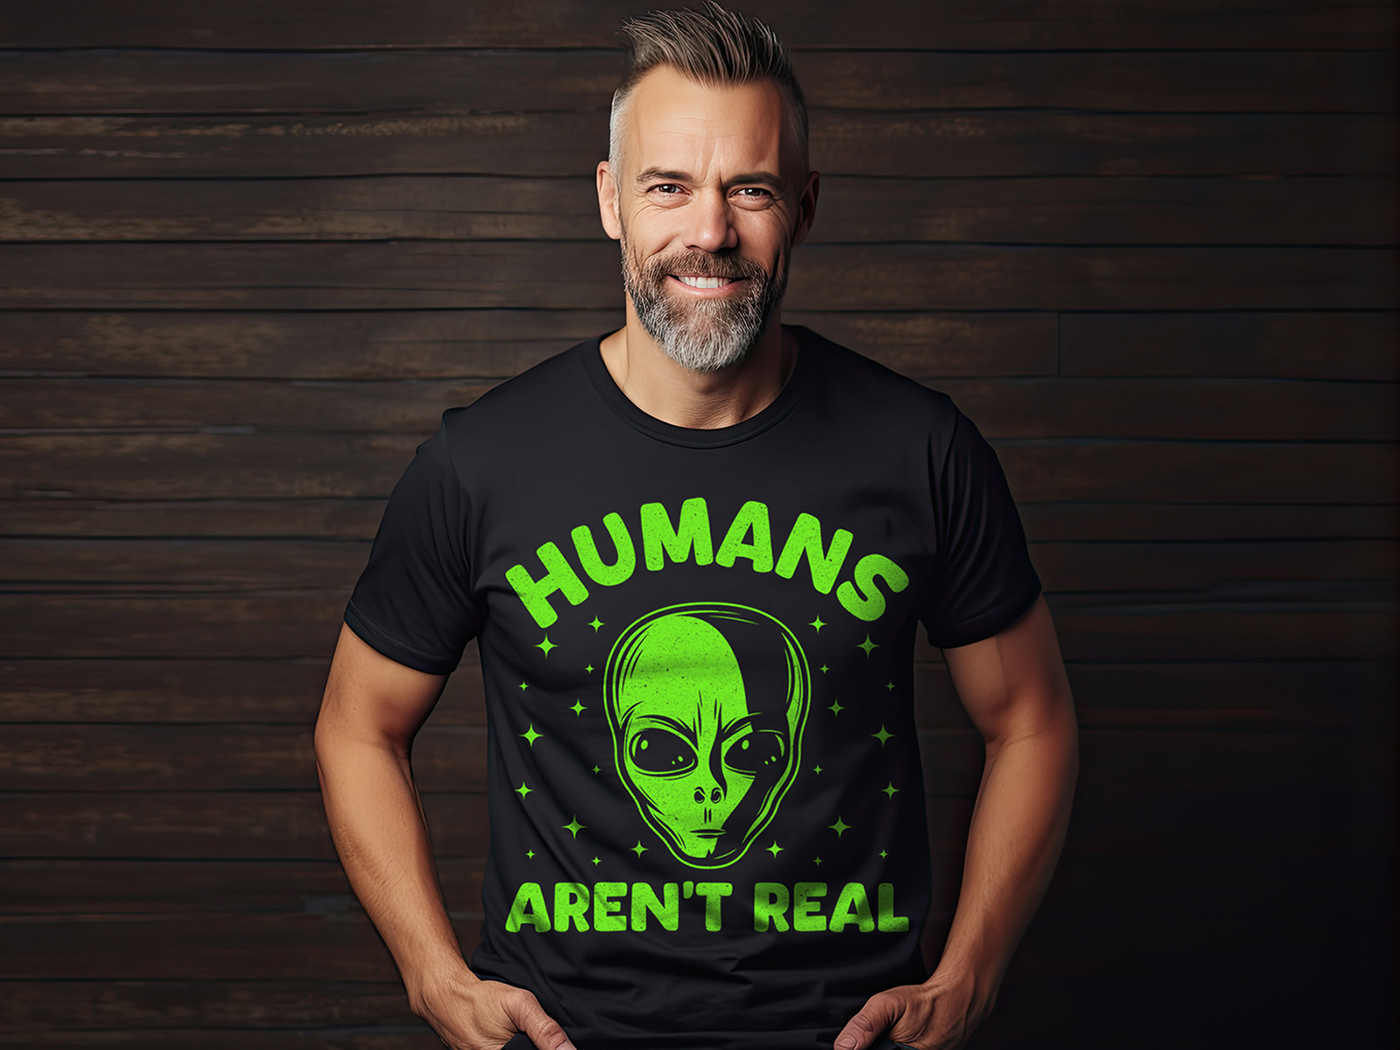 Alien T-shirt Design